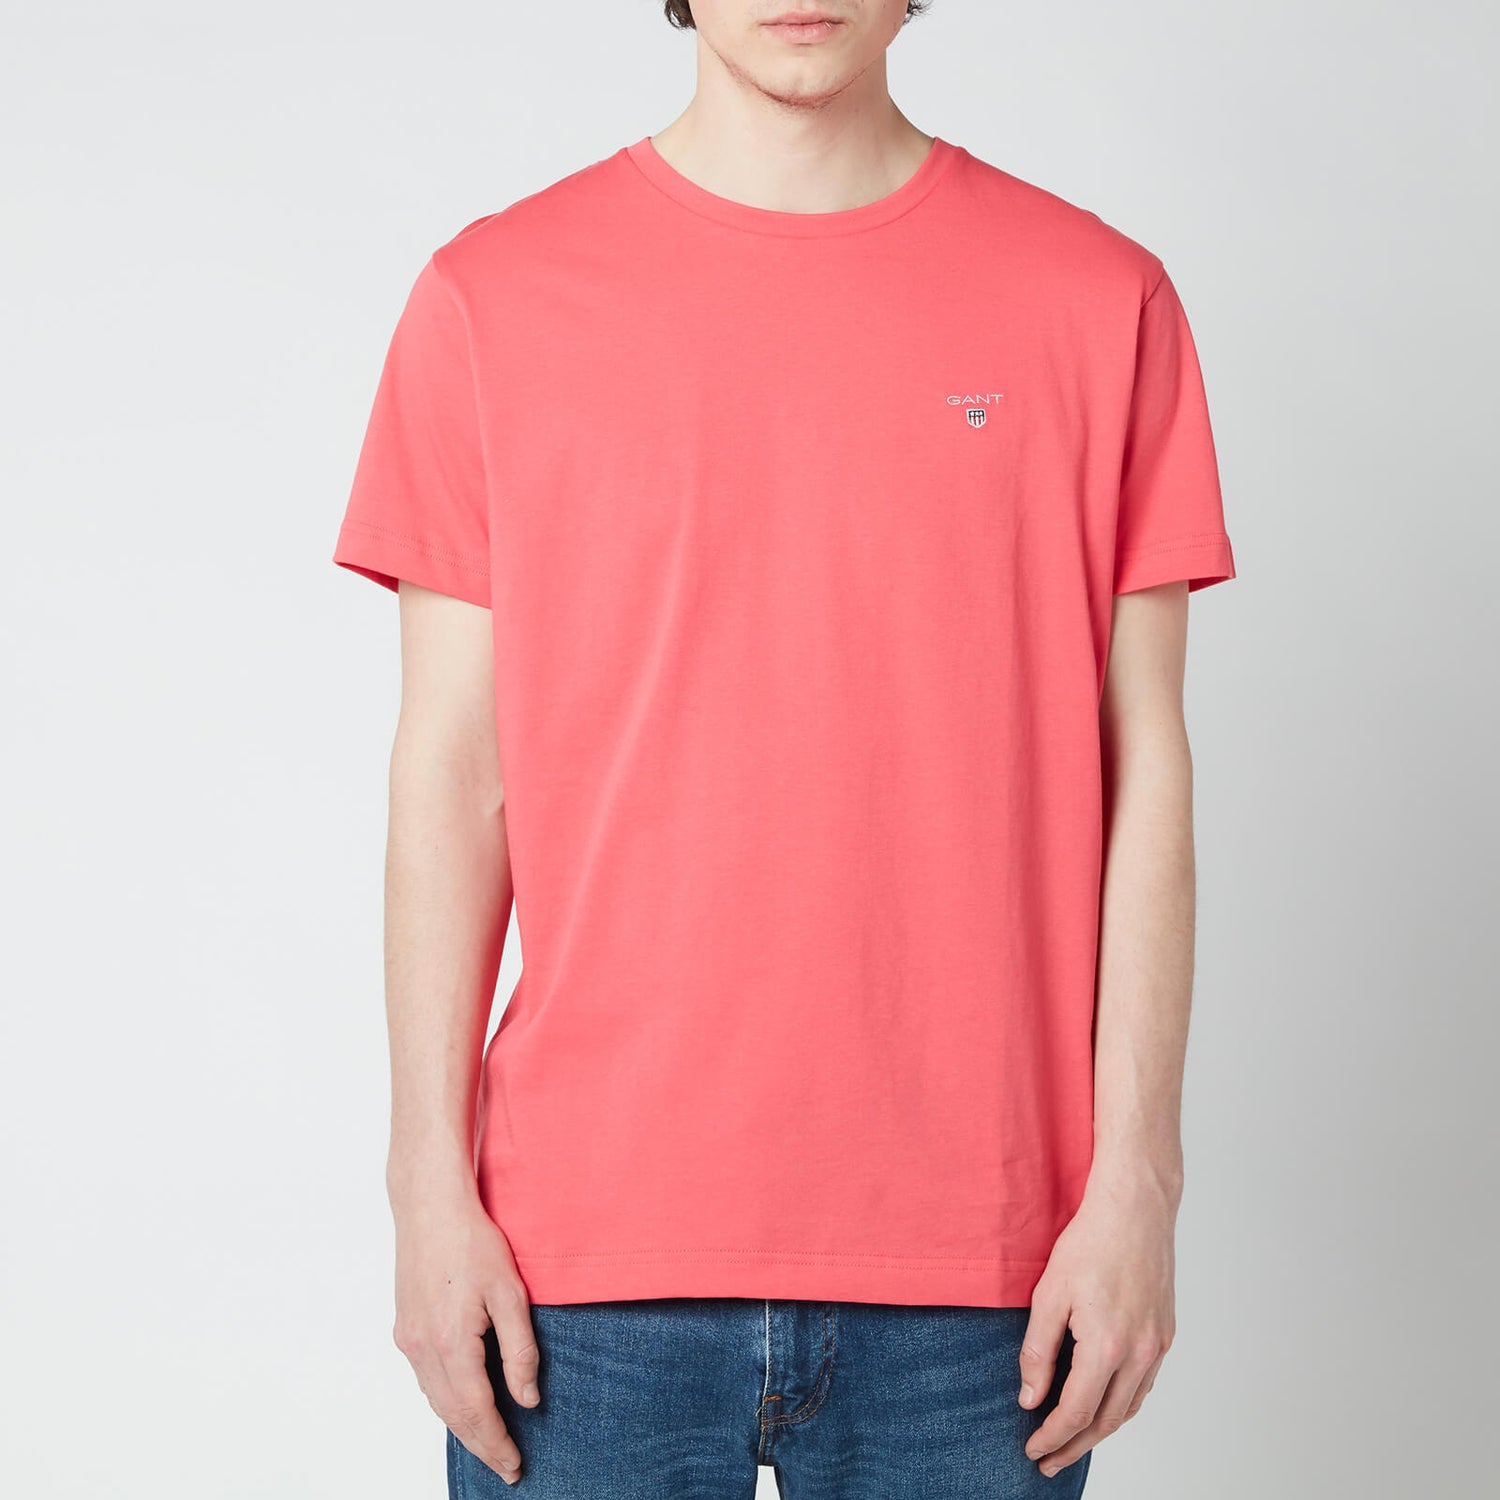 GANT Men's Original T-Shirt - Paradise Pink